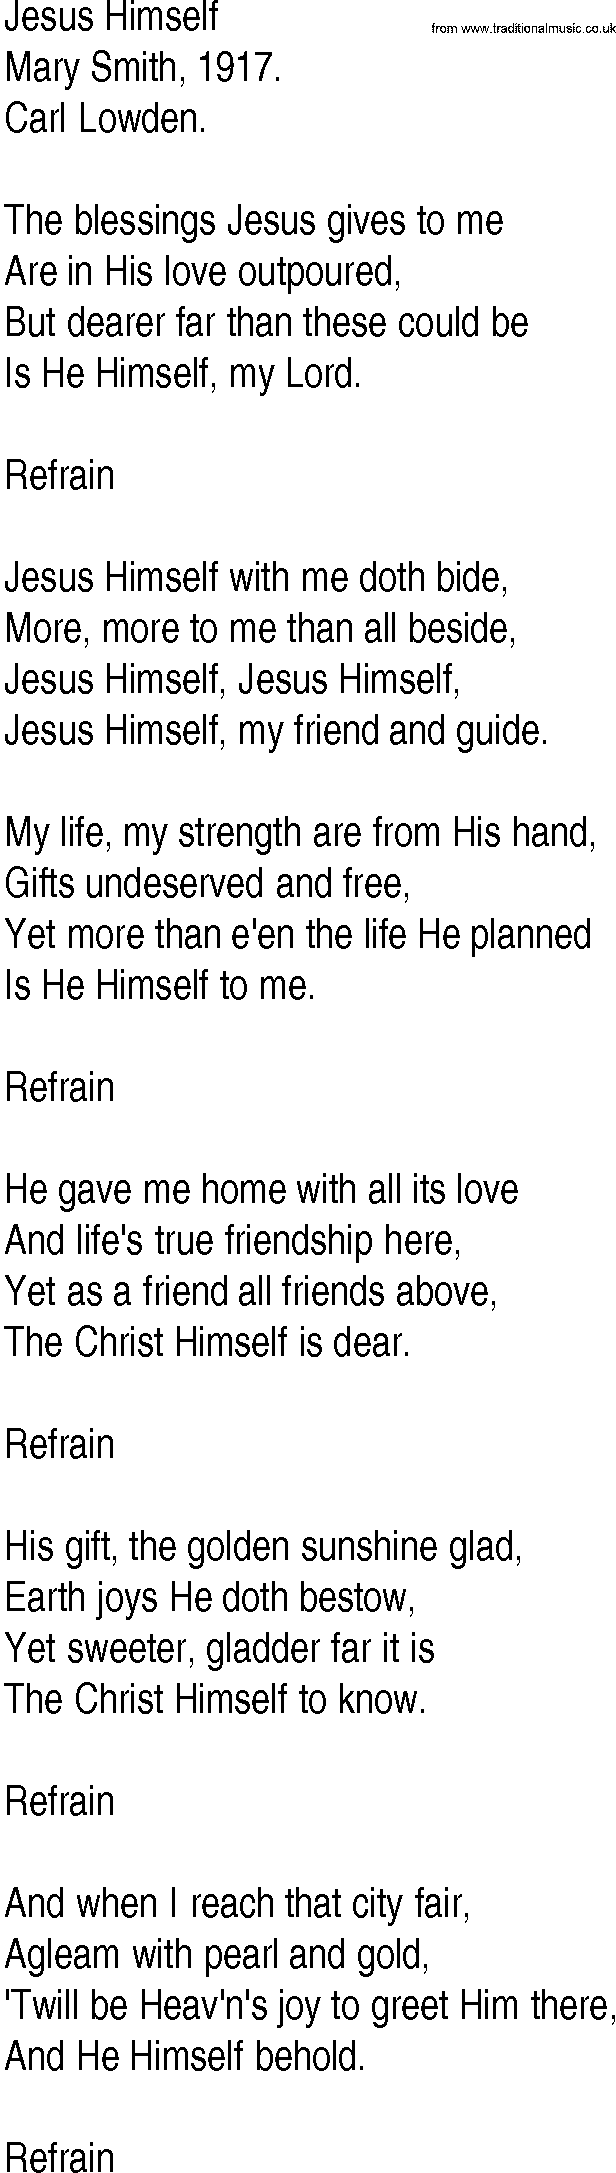 Hymn and Gospel Song: Jesus Himself by Mary Smith lyrics